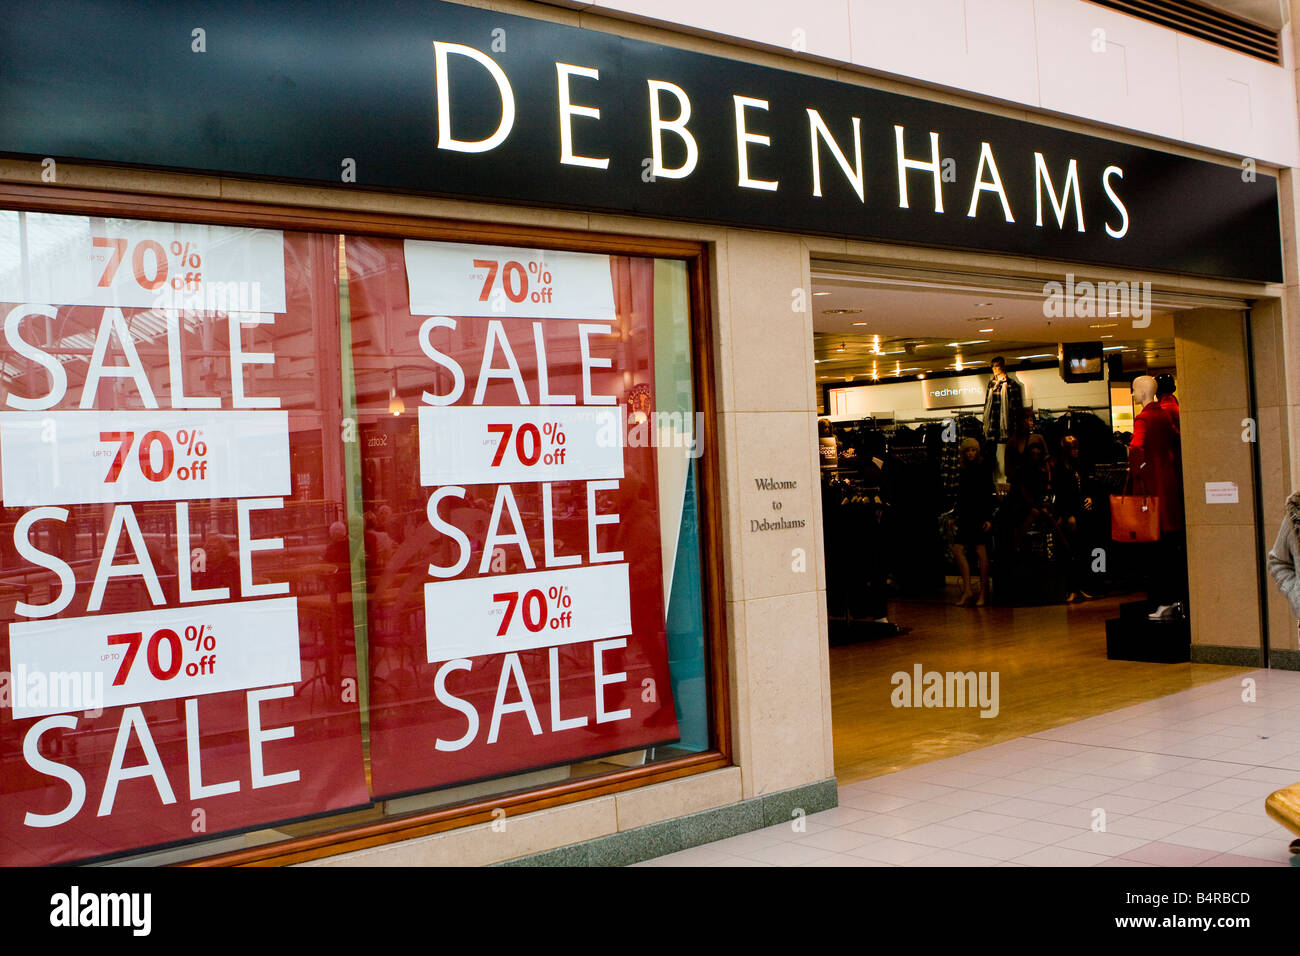 Debenhams Sale 70% off Stock Photo - Alamy